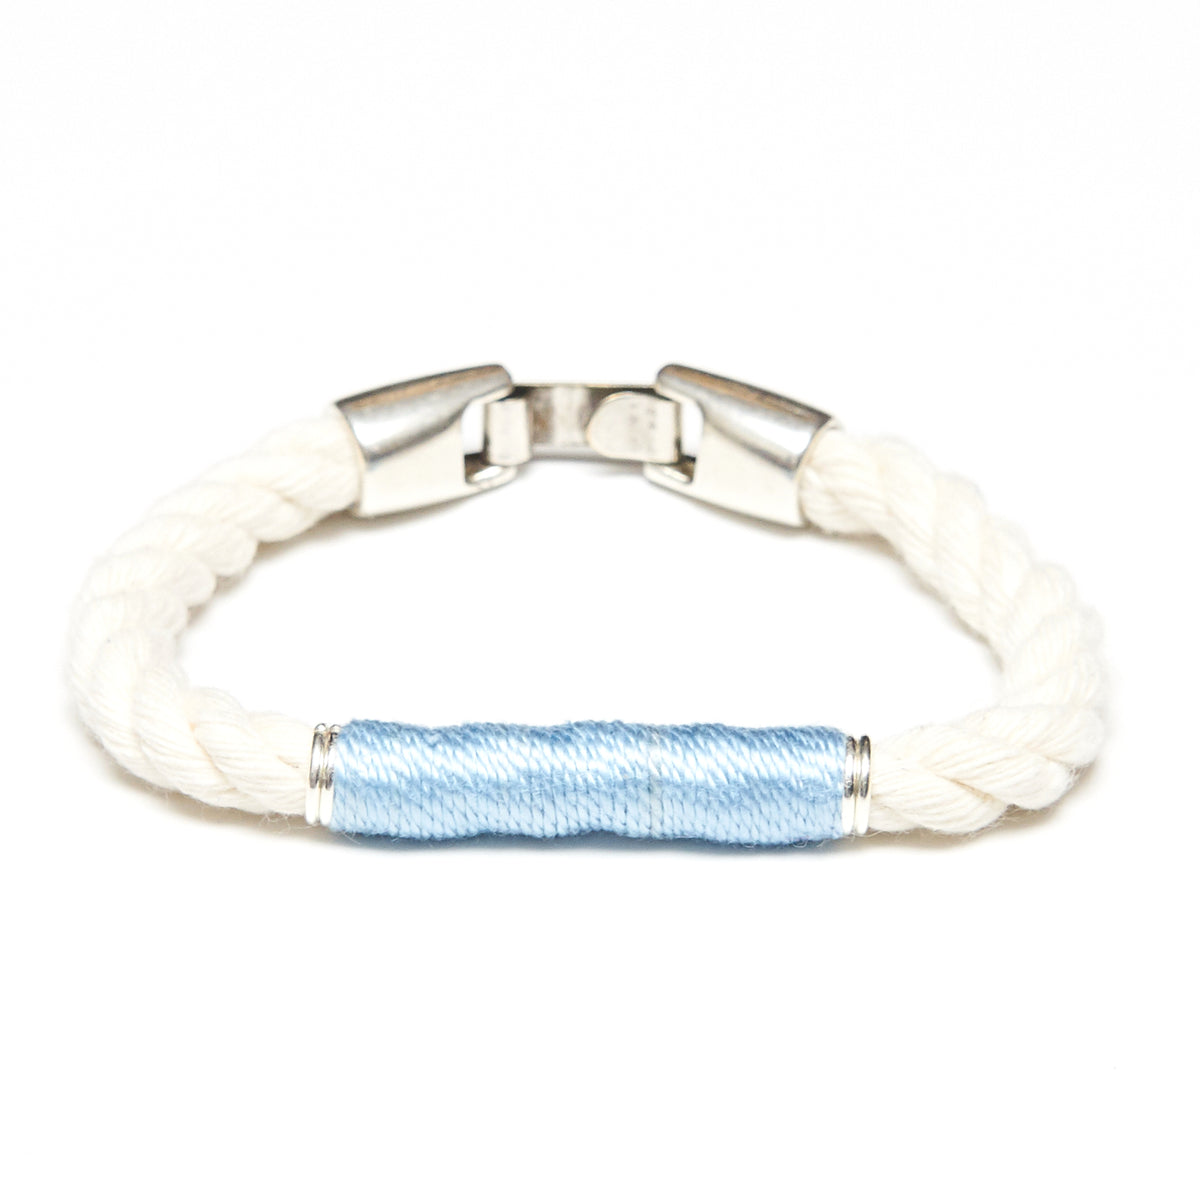 Allison Cole Jewelry - Beacon Bracelet - Ivory/ Light Blue/ Silver